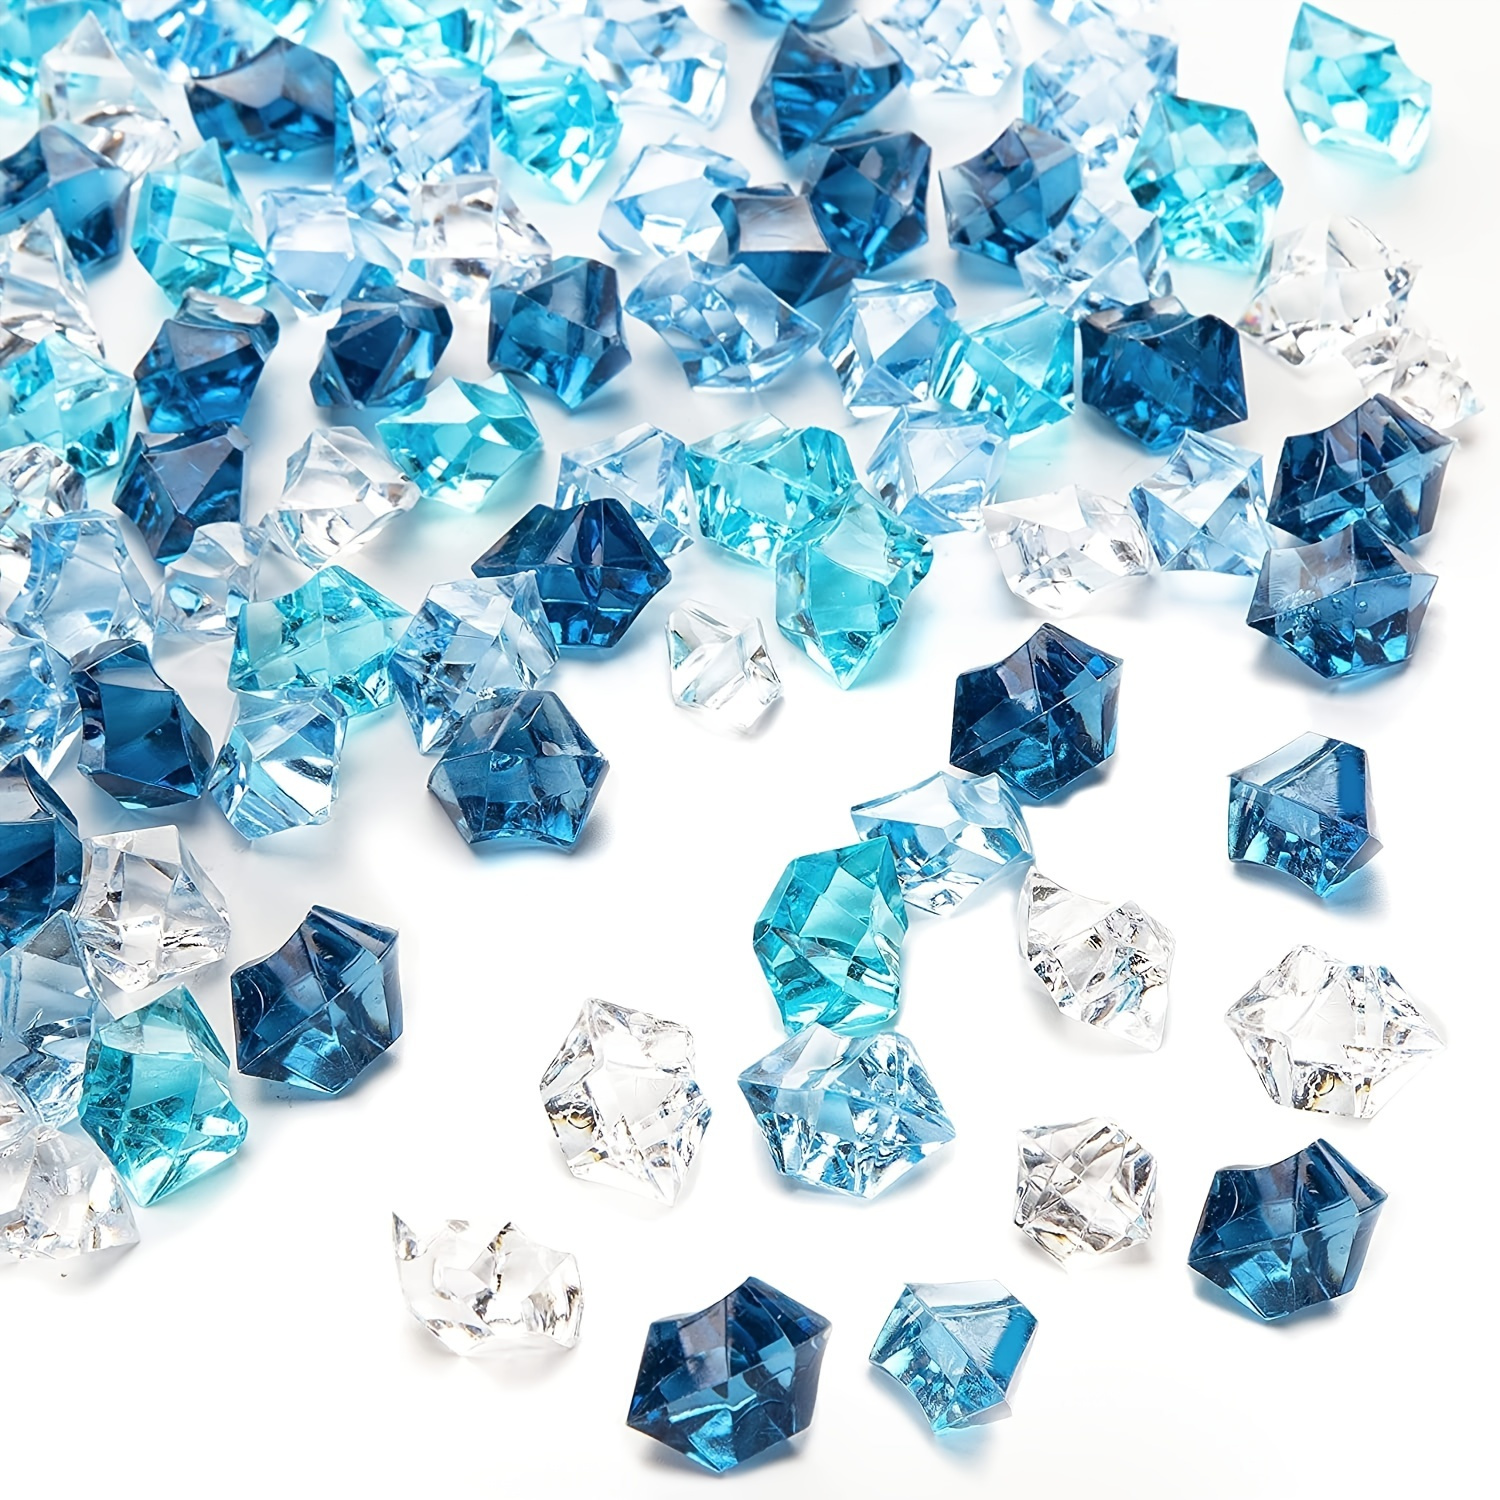 200*Acrylic Stones Plastic Gems Ice Grains Colorful Small Stones